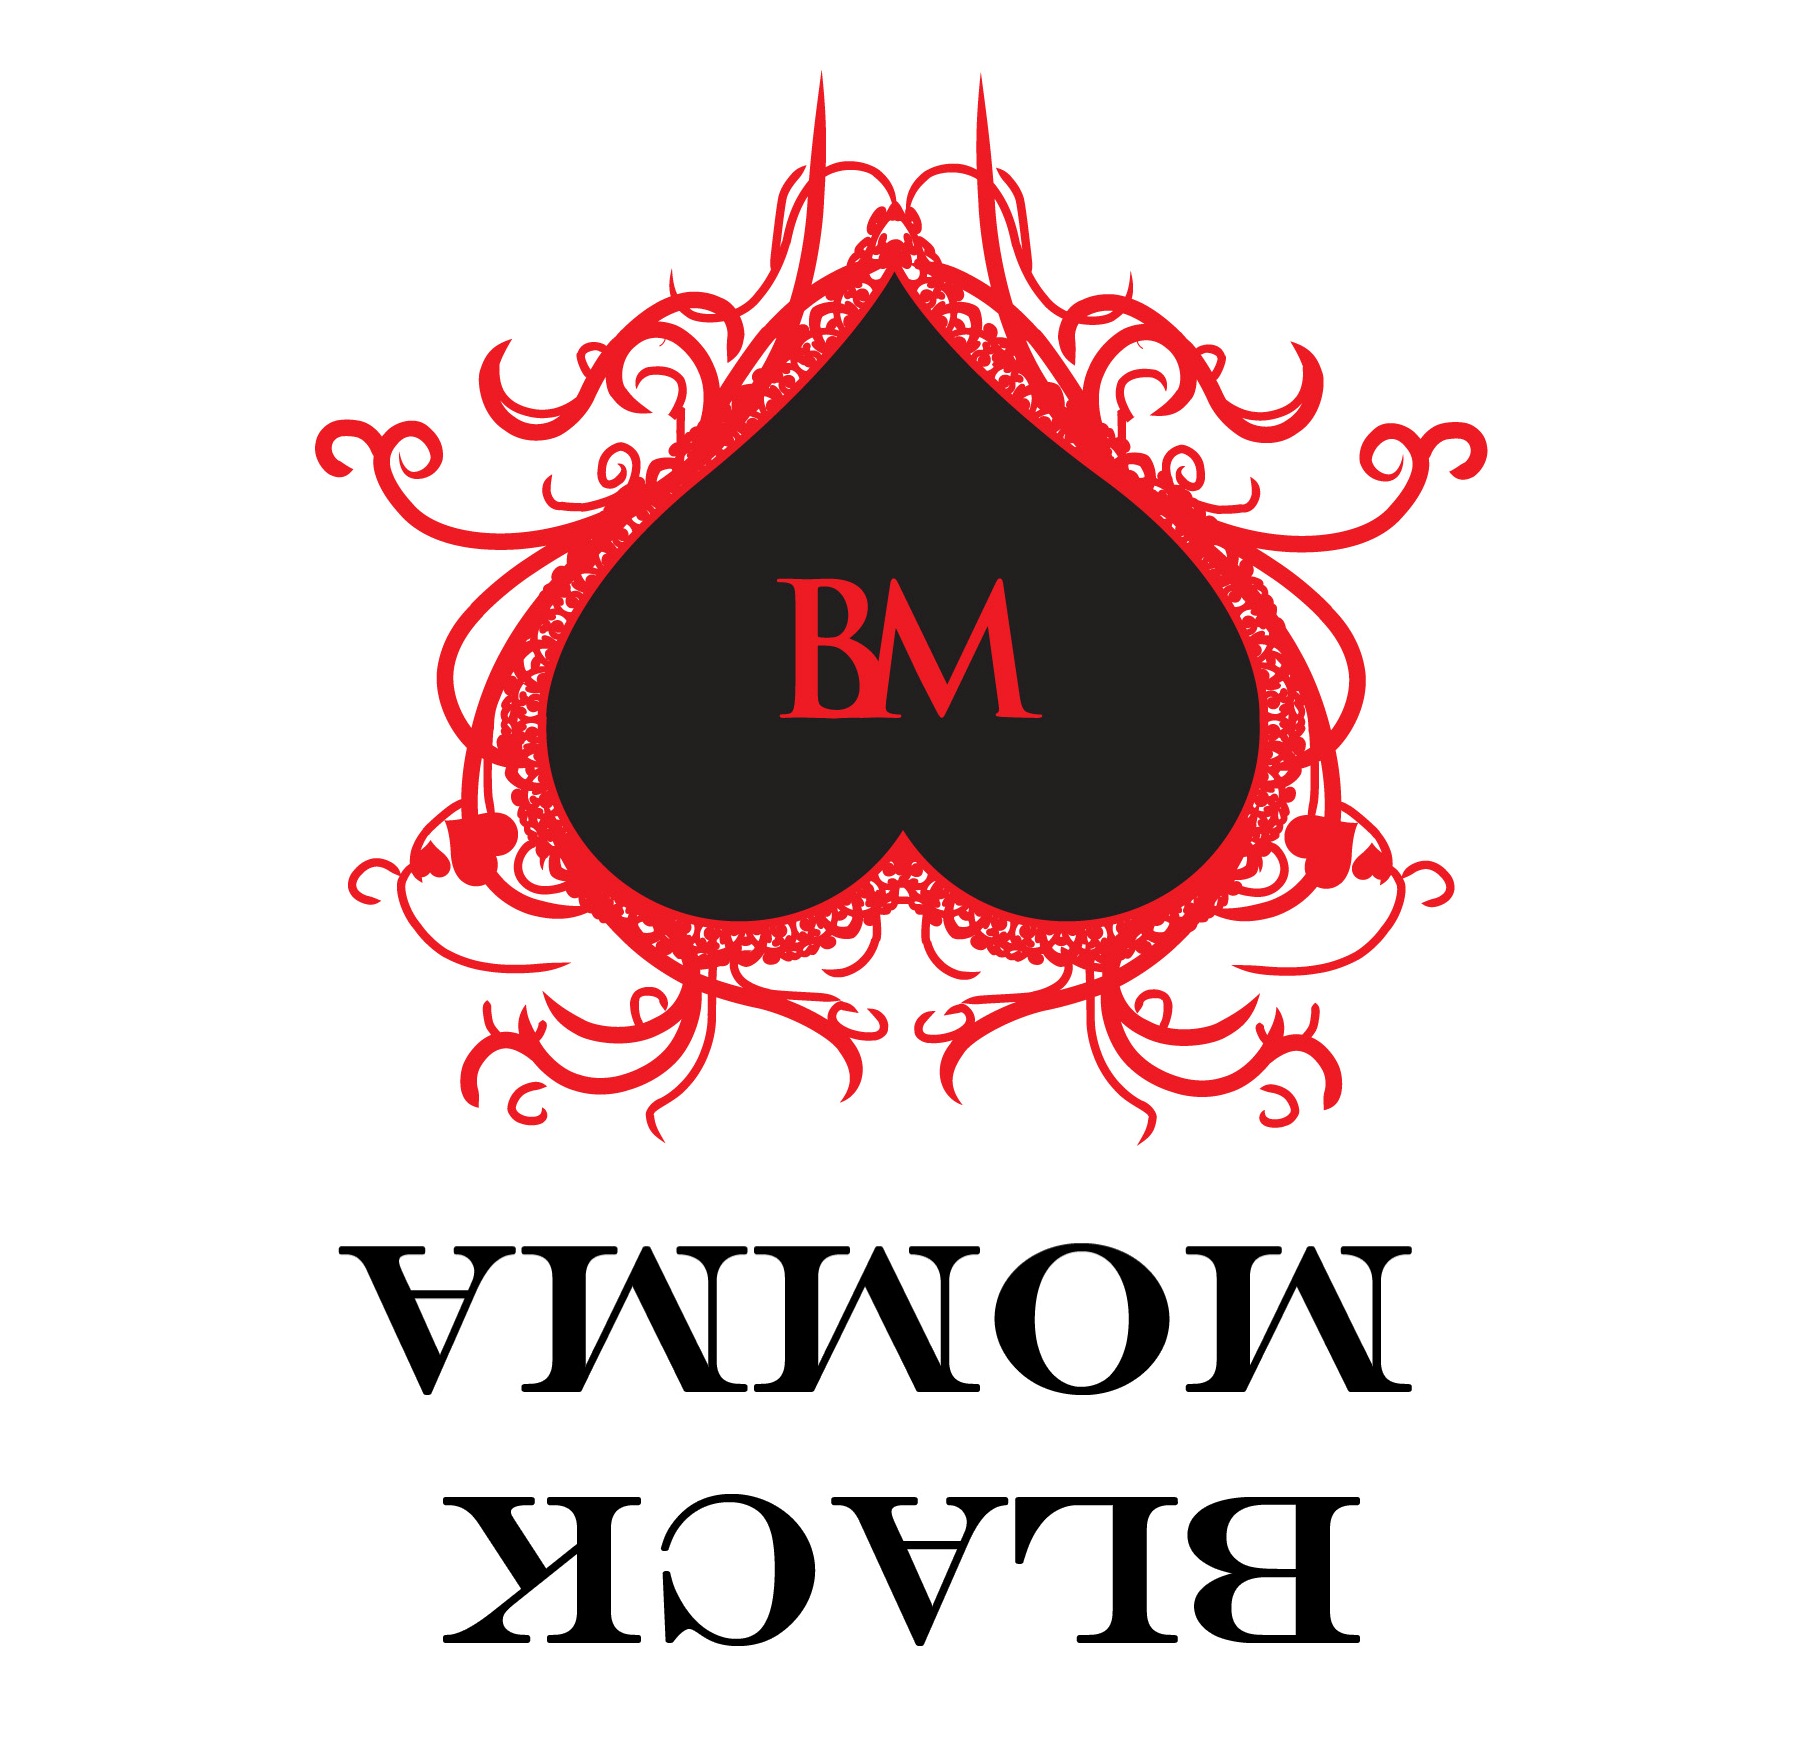 blackmomma-logo-1803-x-1758.jpg